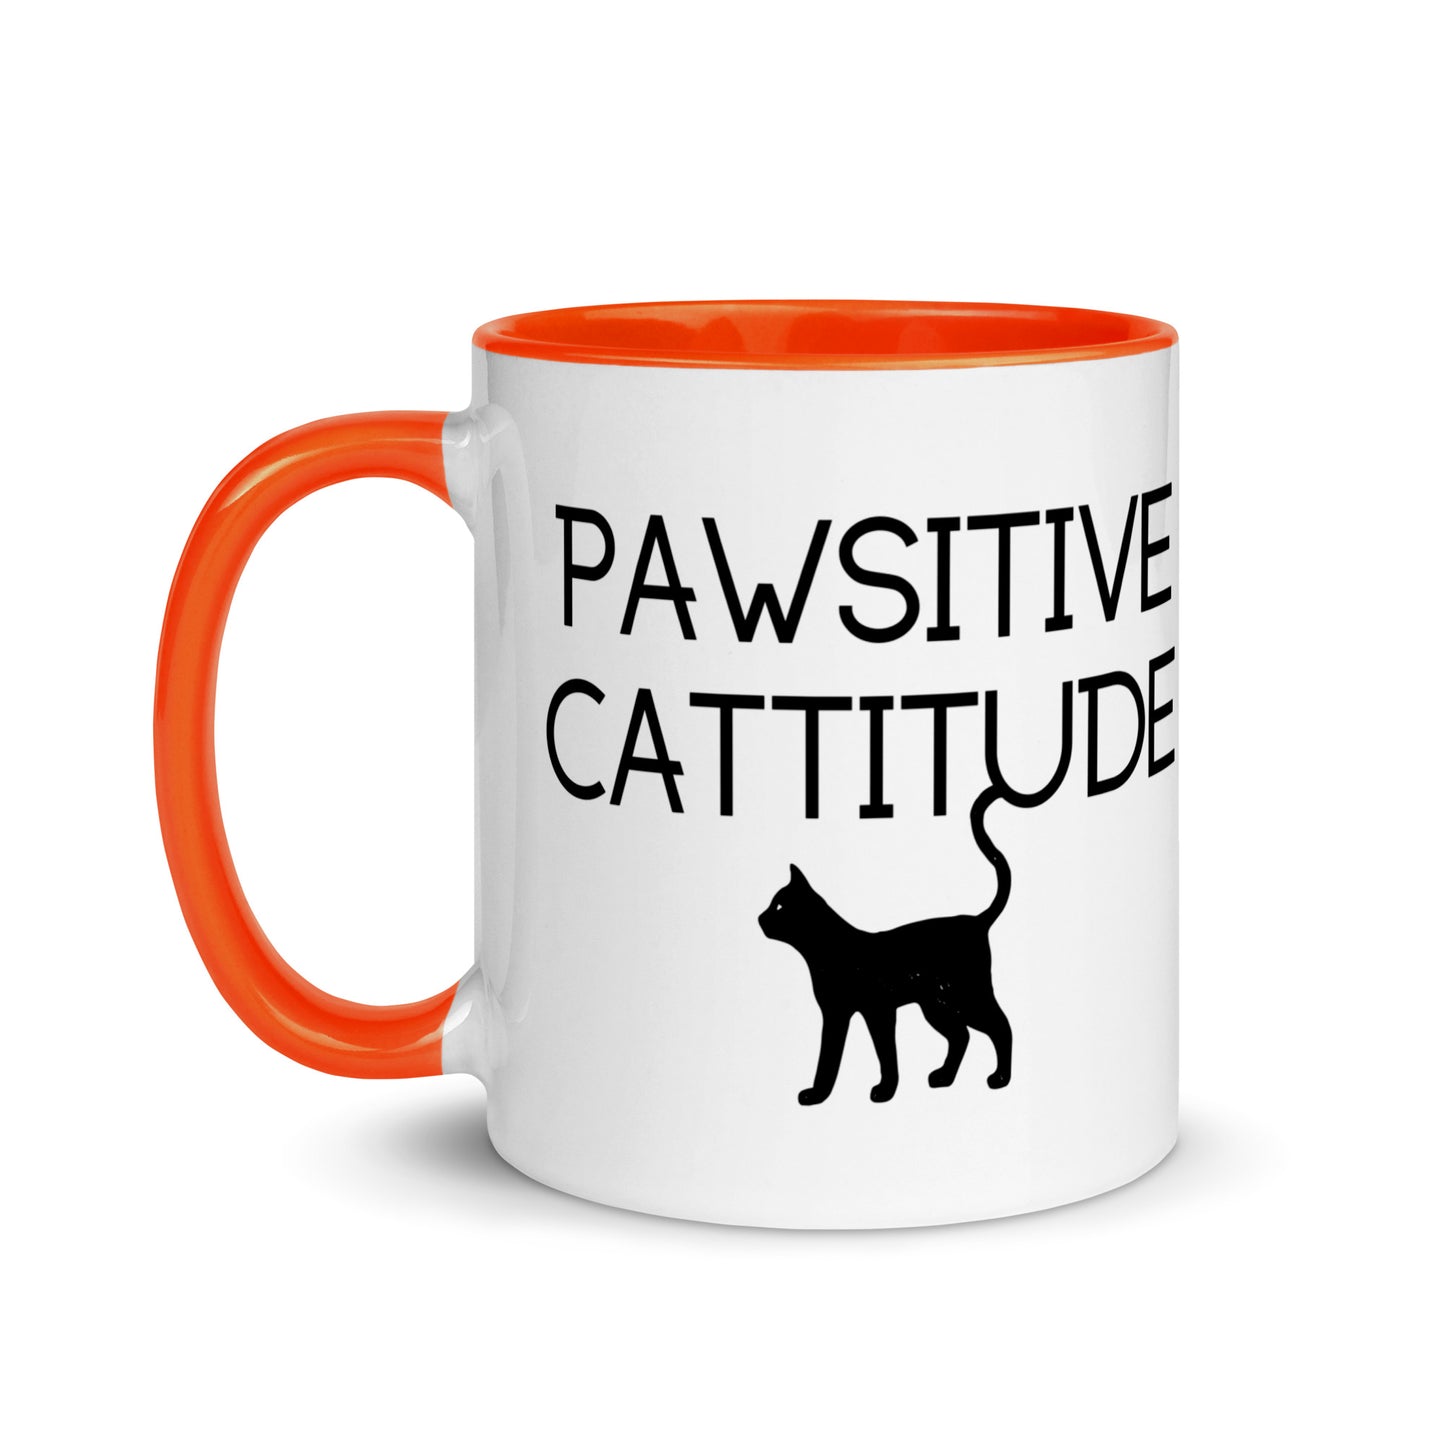 Pawsitive Cattitude Mug with Color Inside